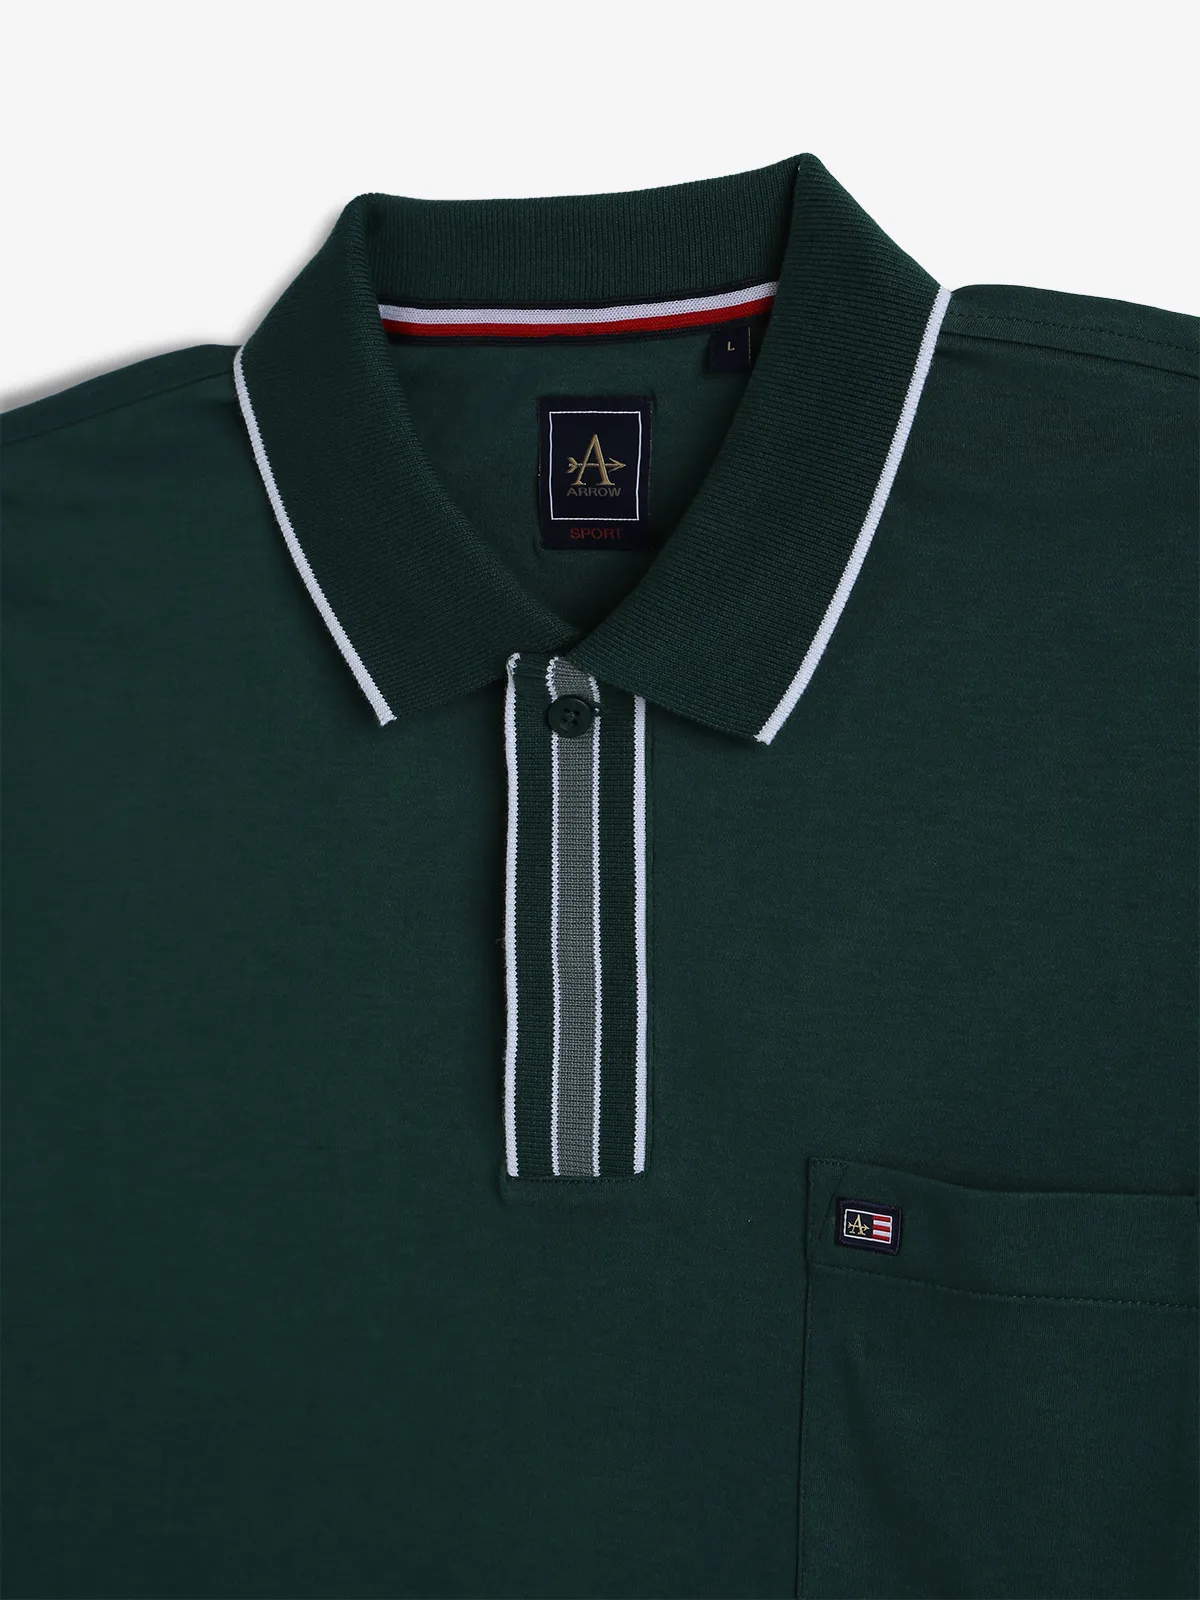 ARROW SPORT plain dark green cotton polo t-shirt